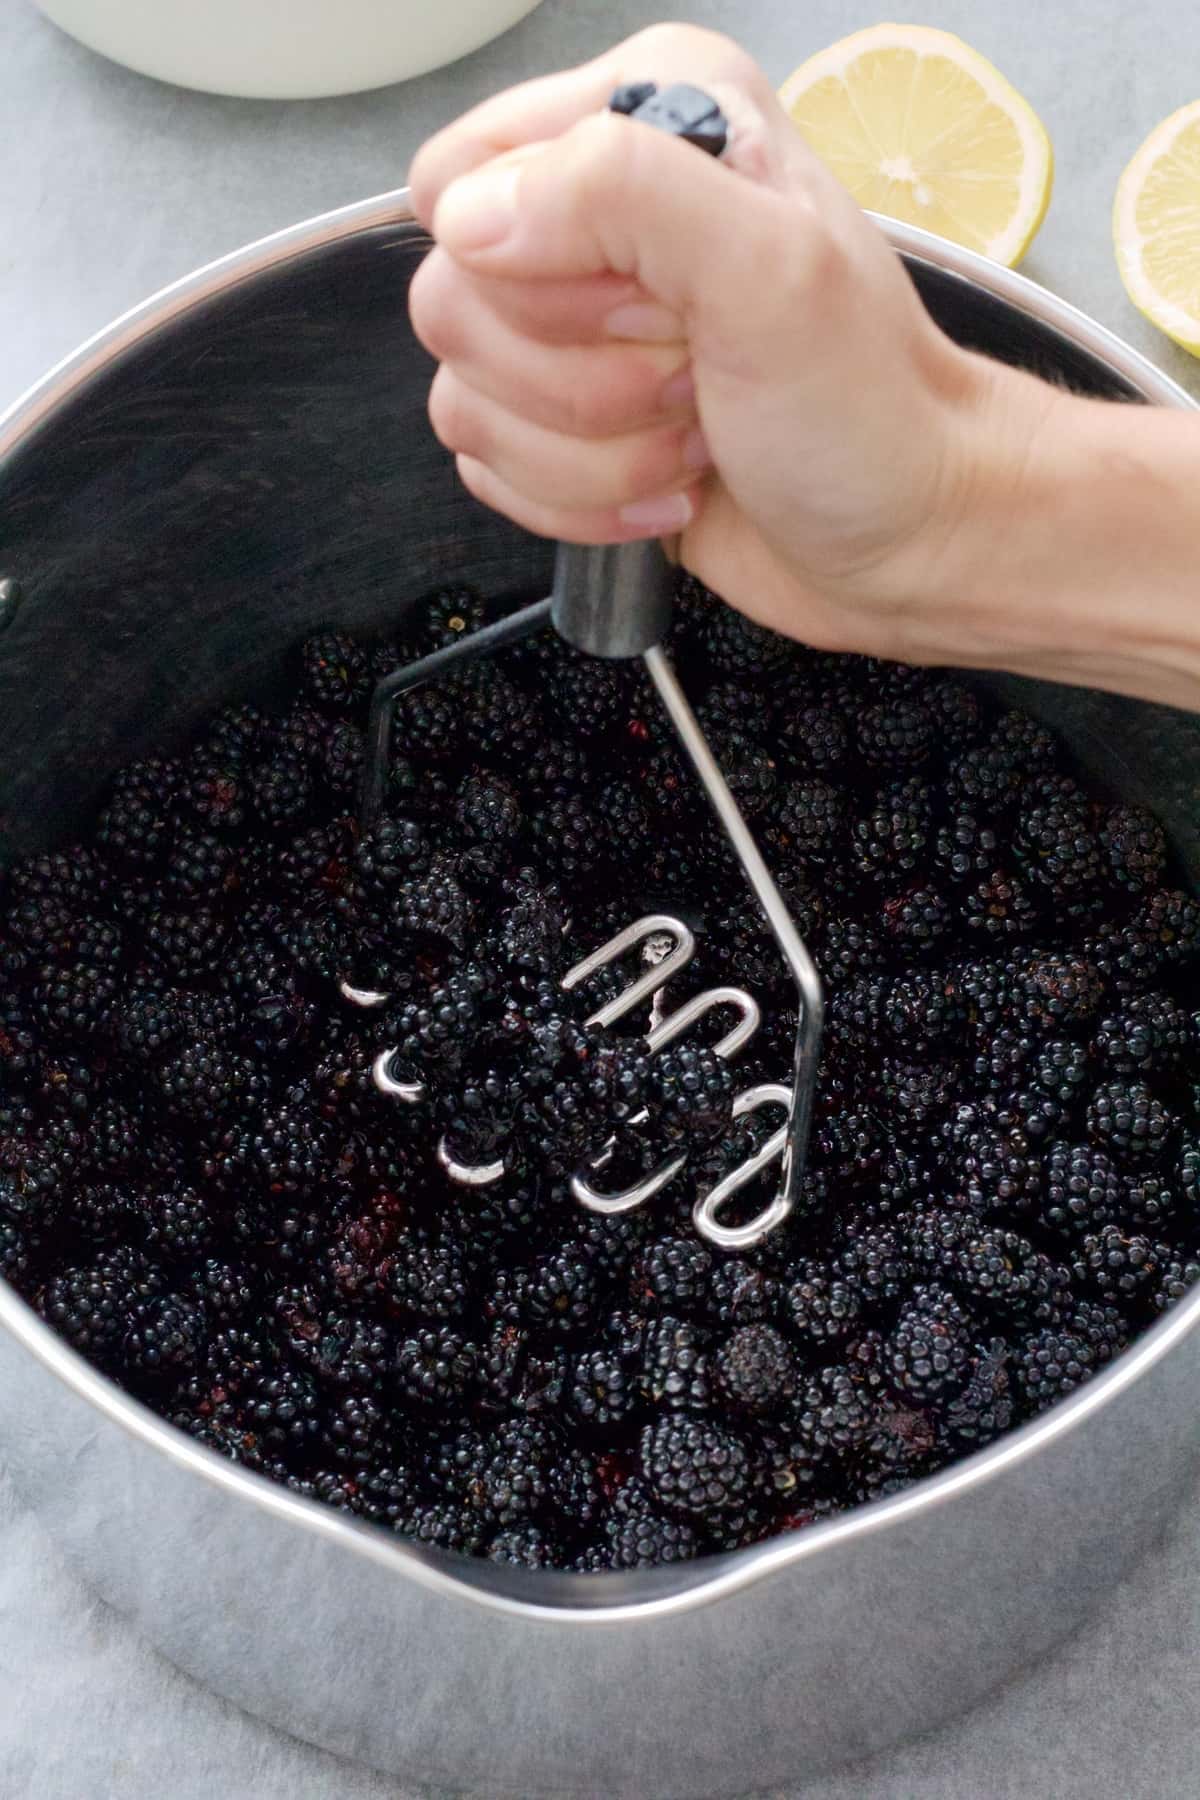 Hand mashing blackberries with potato masher in a pan.